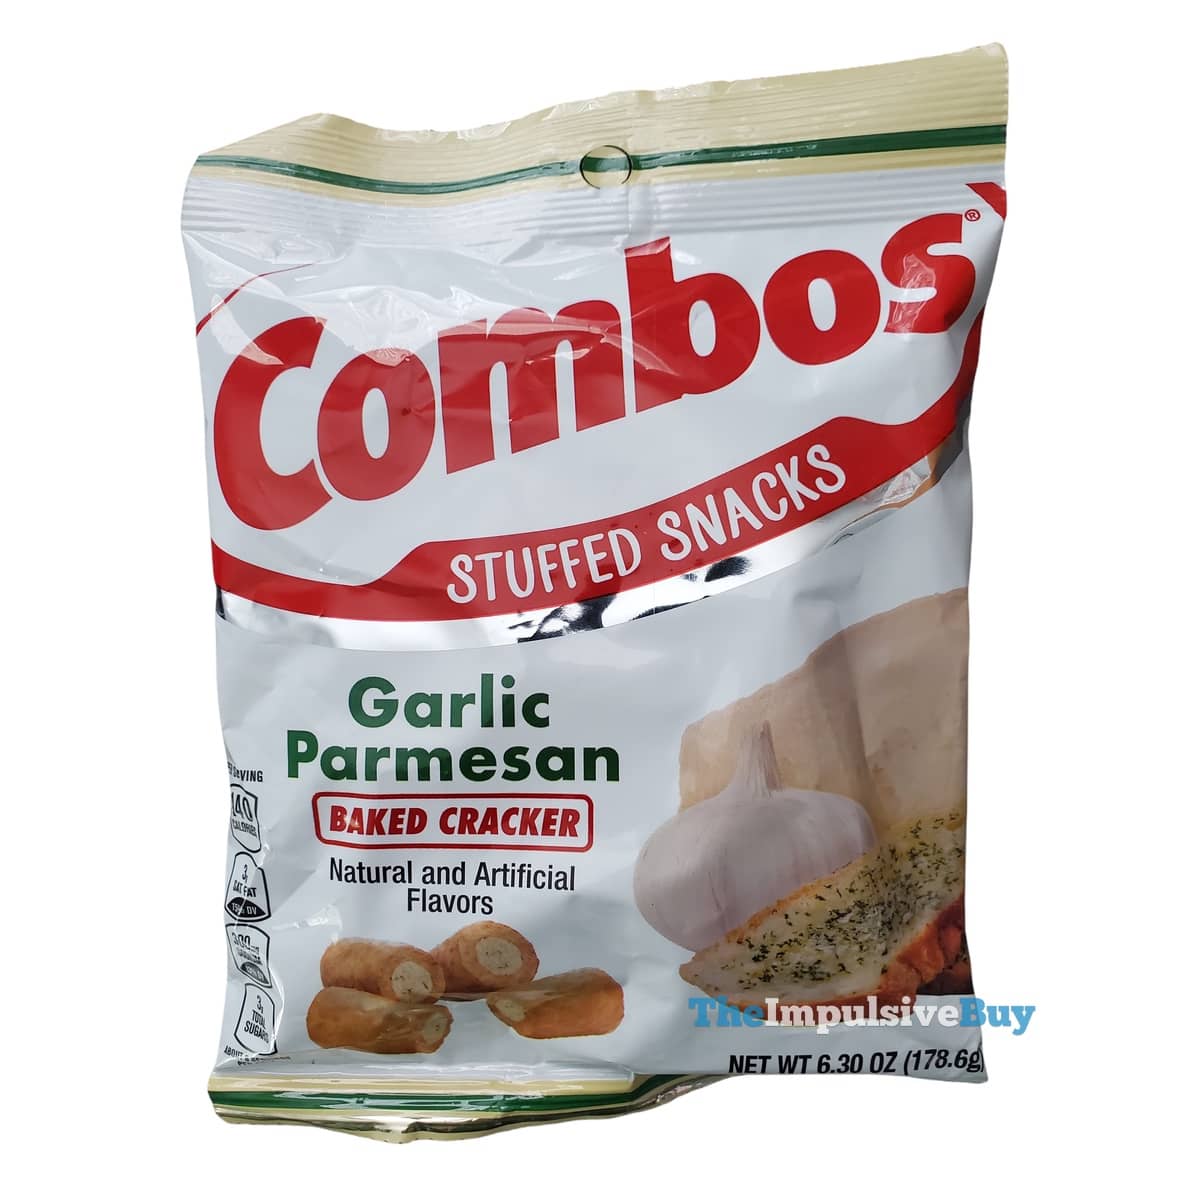 REVIEW: Garlic Parmesan Combos - The Impulsive Buy